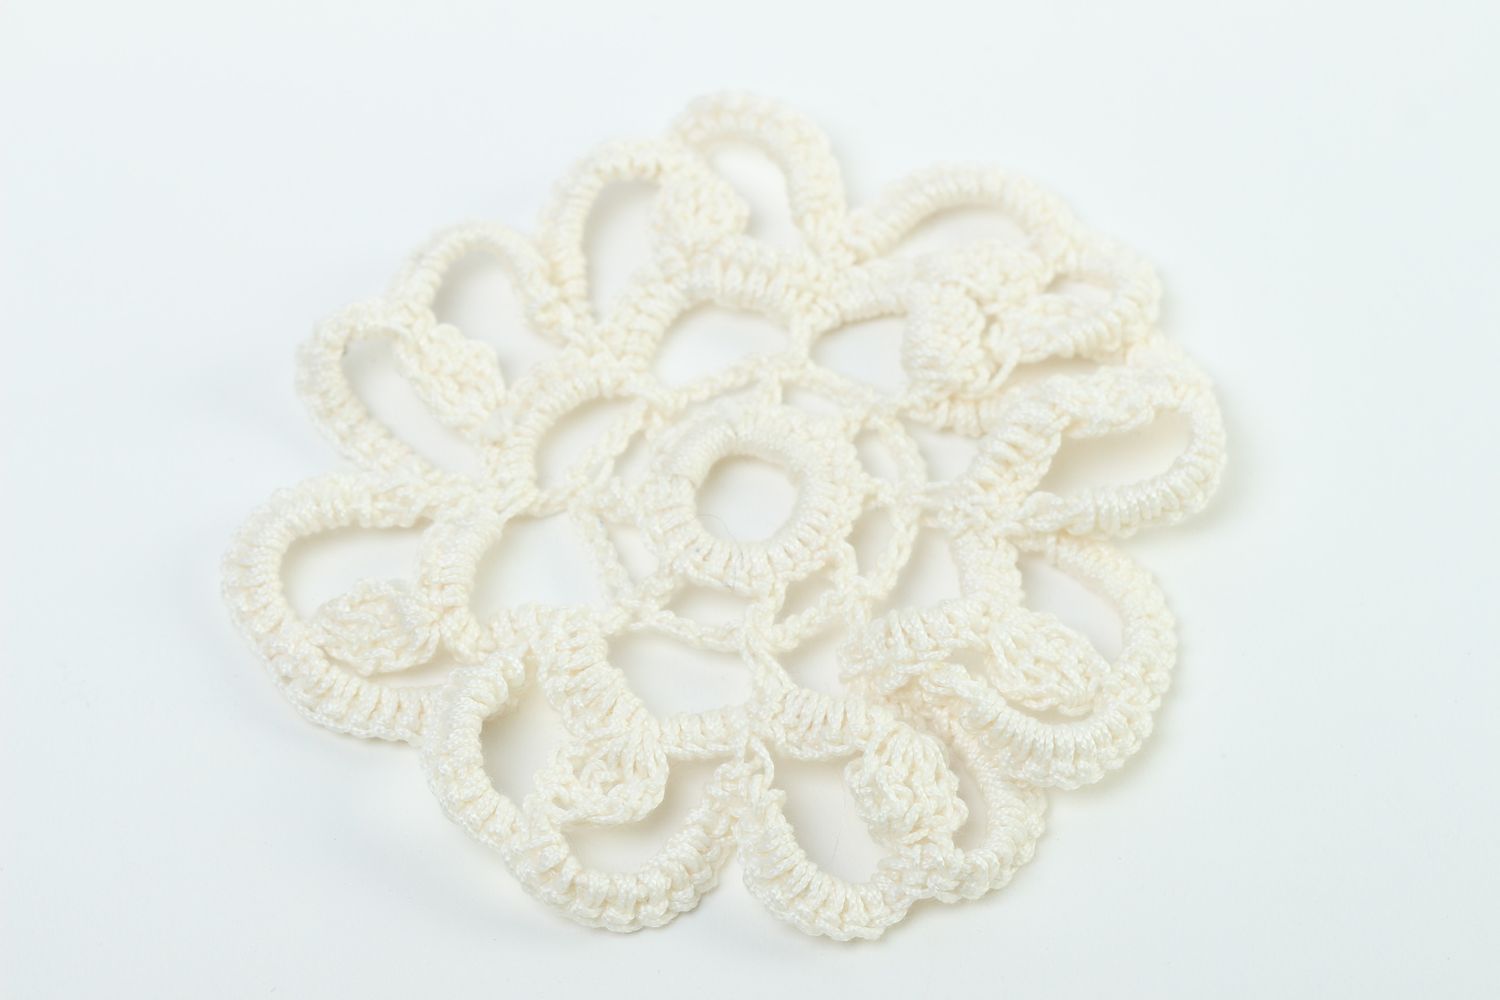 Crochet flower jewelry supplies handmade decorative flowers craft supplies photo 2